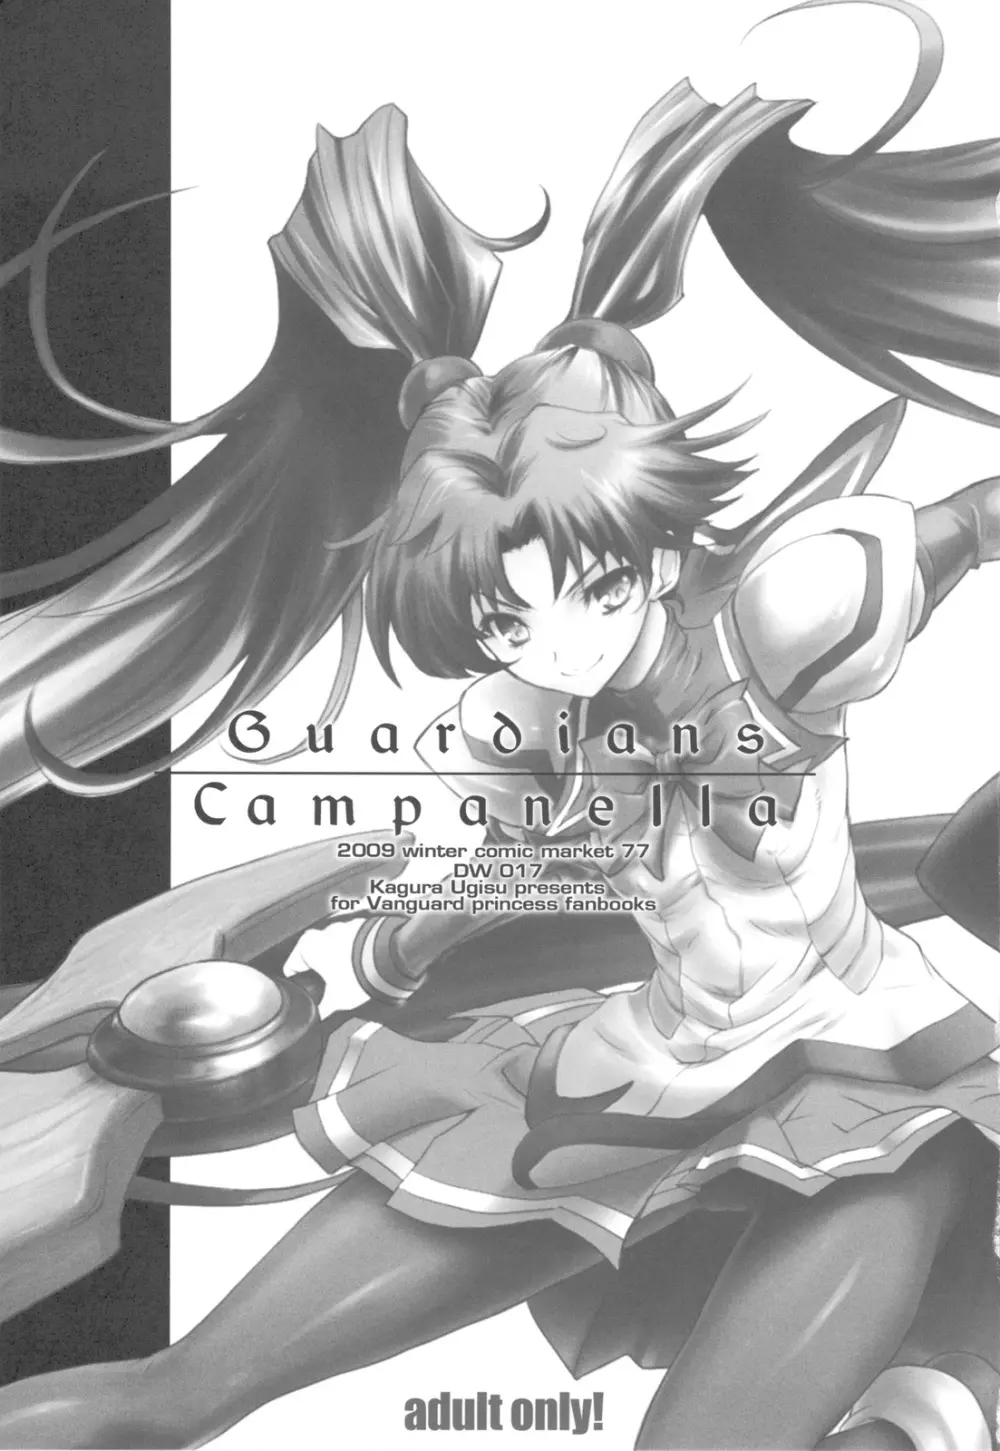 Guardians Campanella - page3